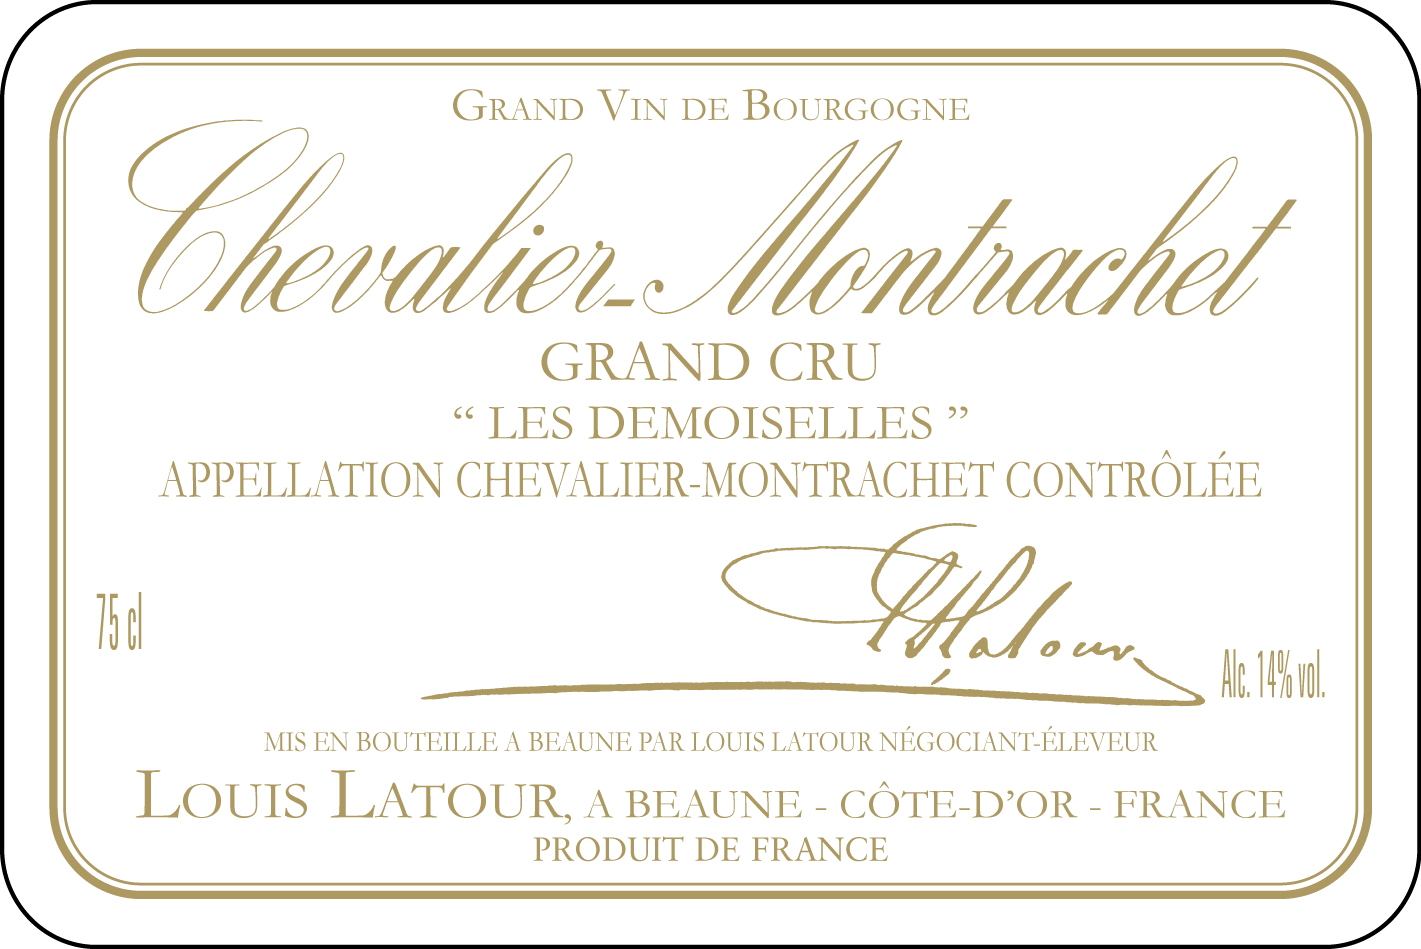 Chevalier-Montrachet Grand cru 